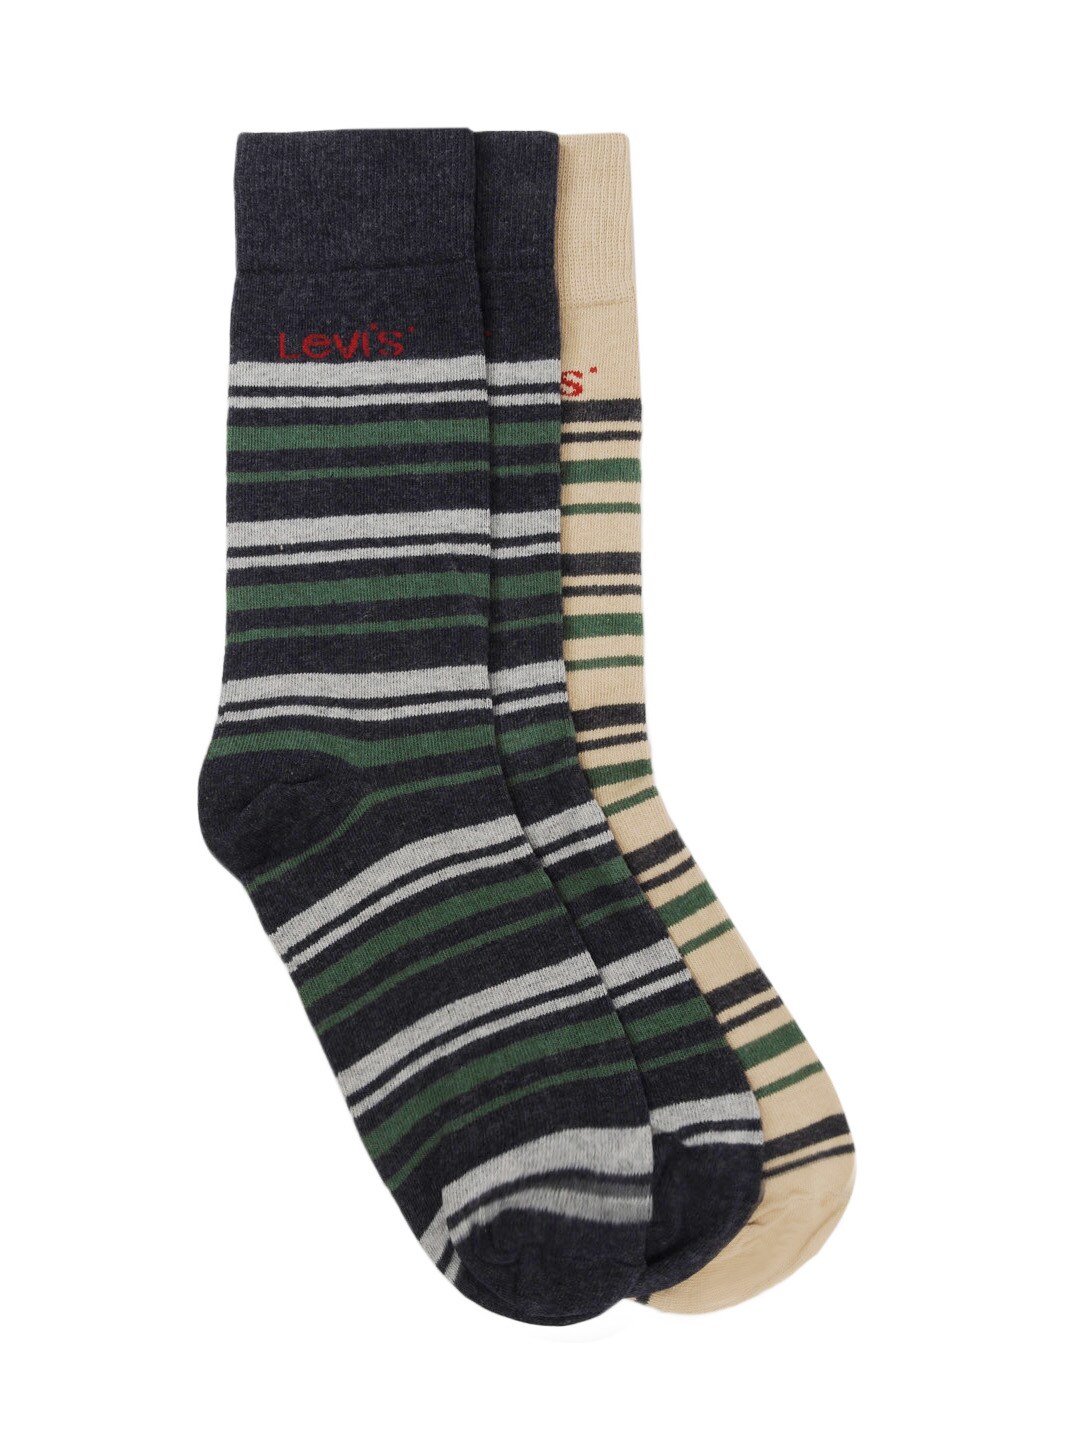 Levis Men Scottish Stripes Flat Knit Pack of 3 Socks